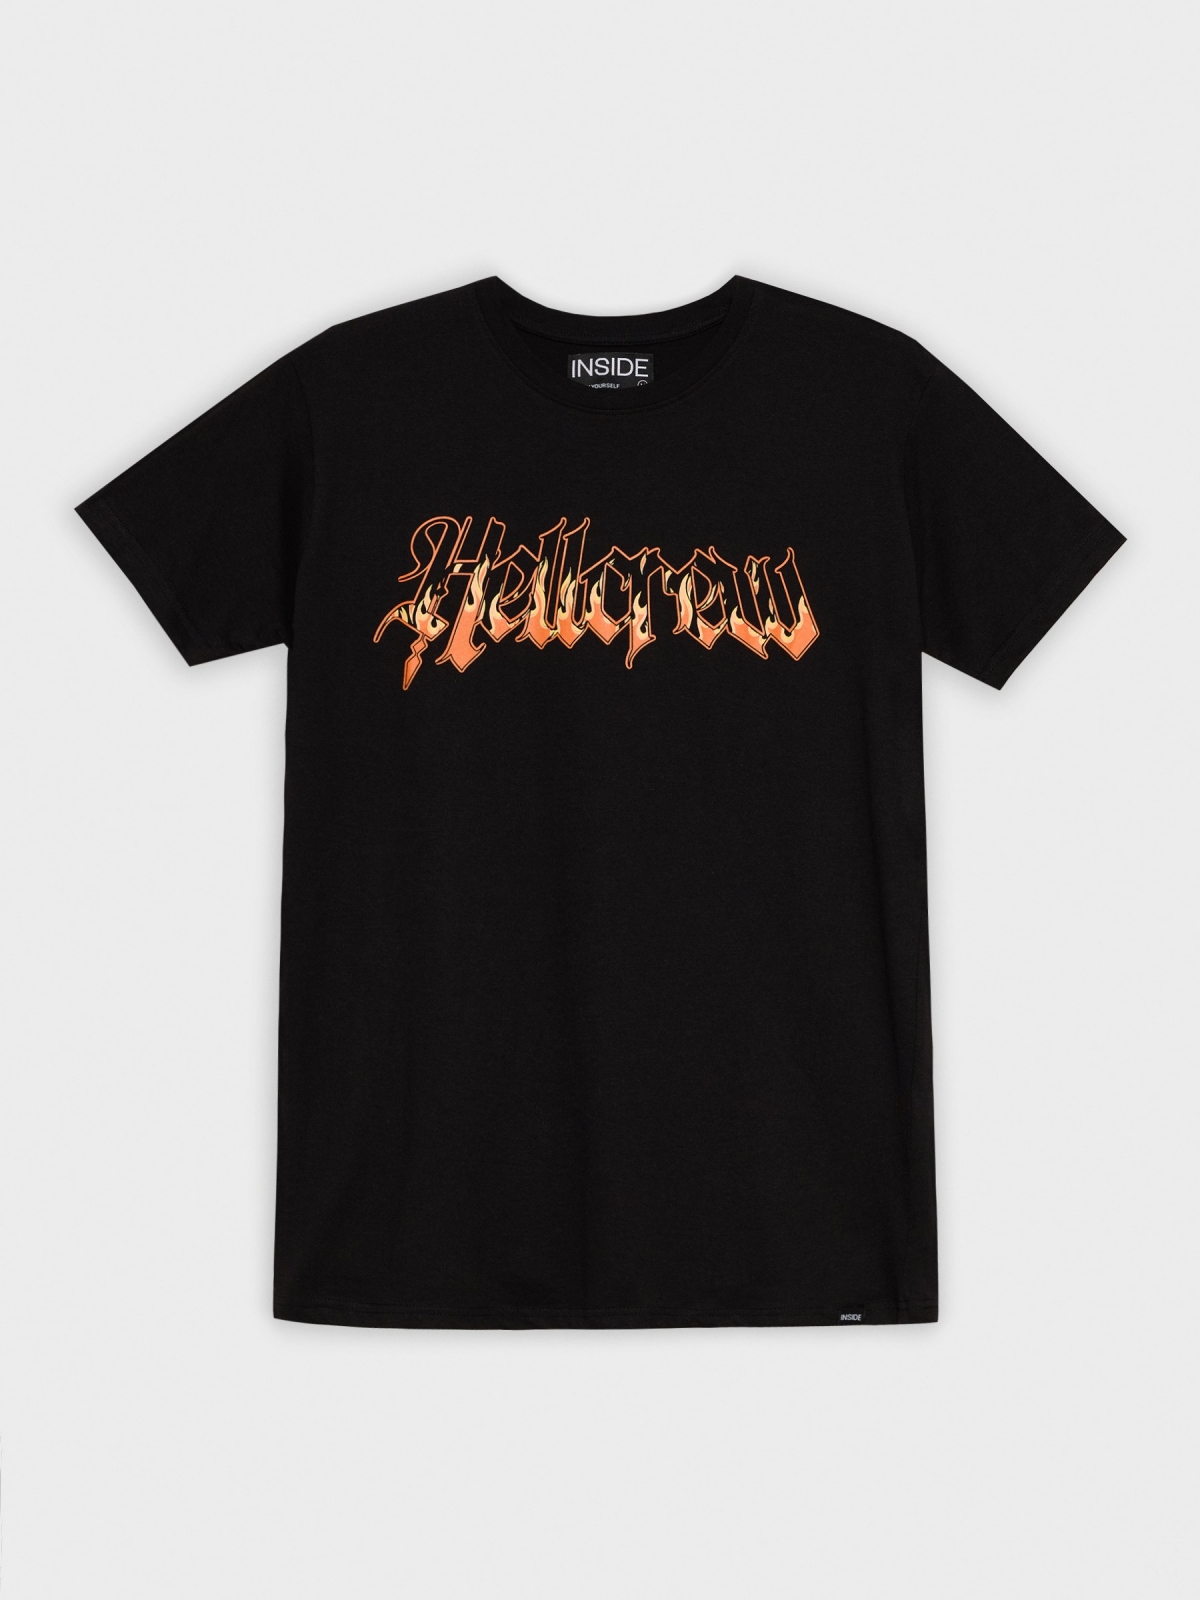  T-shirt do Inferno preto